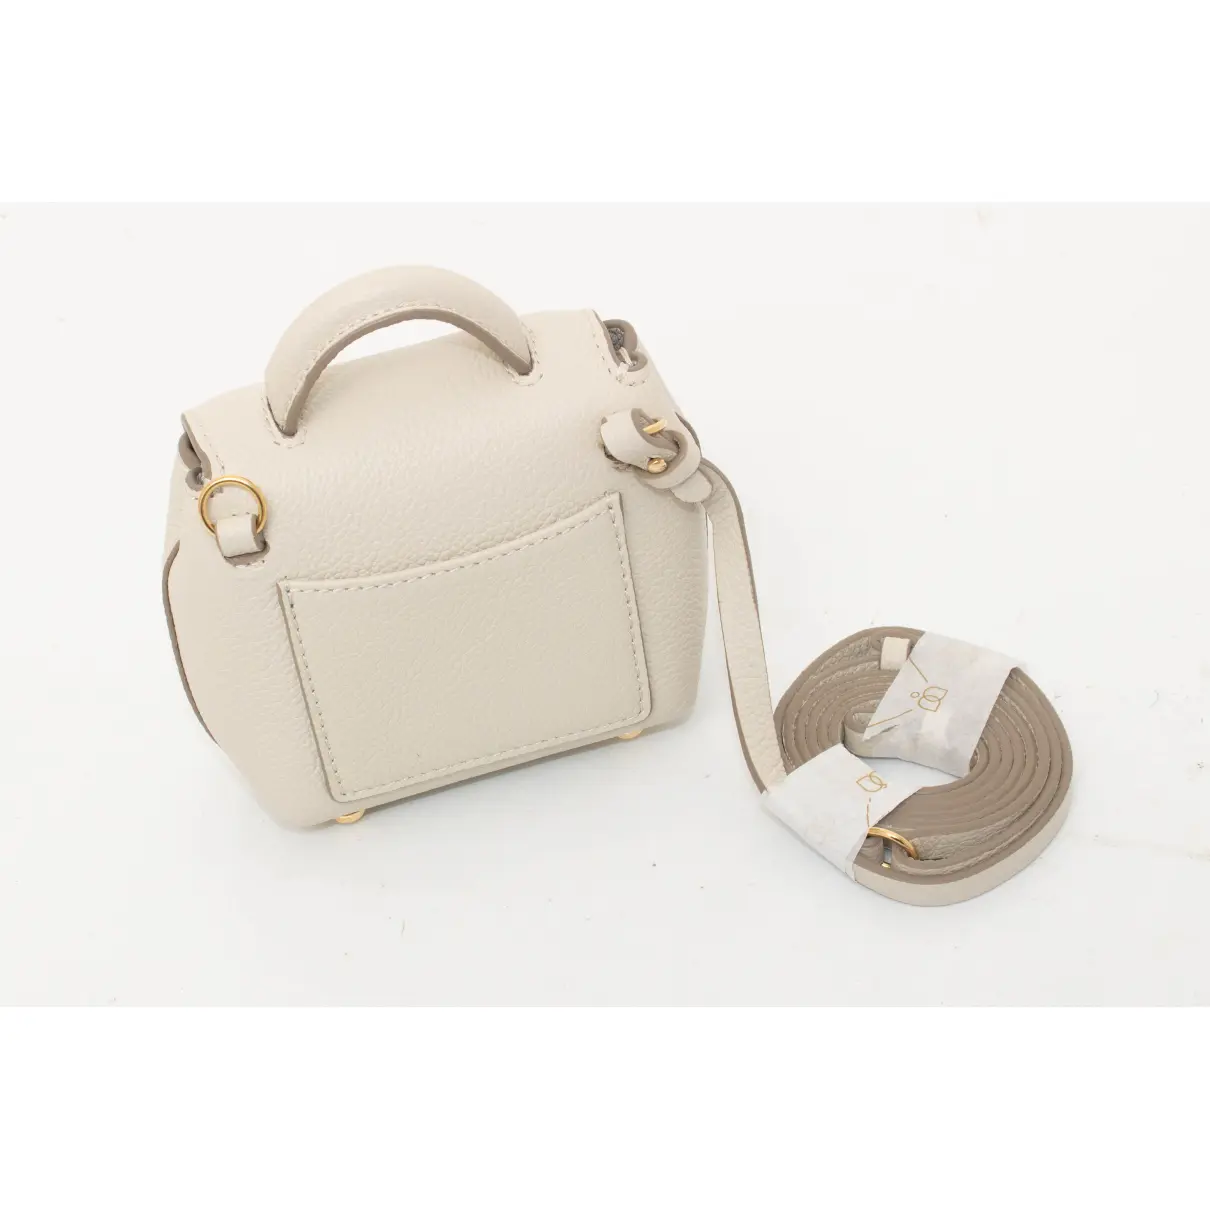 Buy Polene Leather handbag online